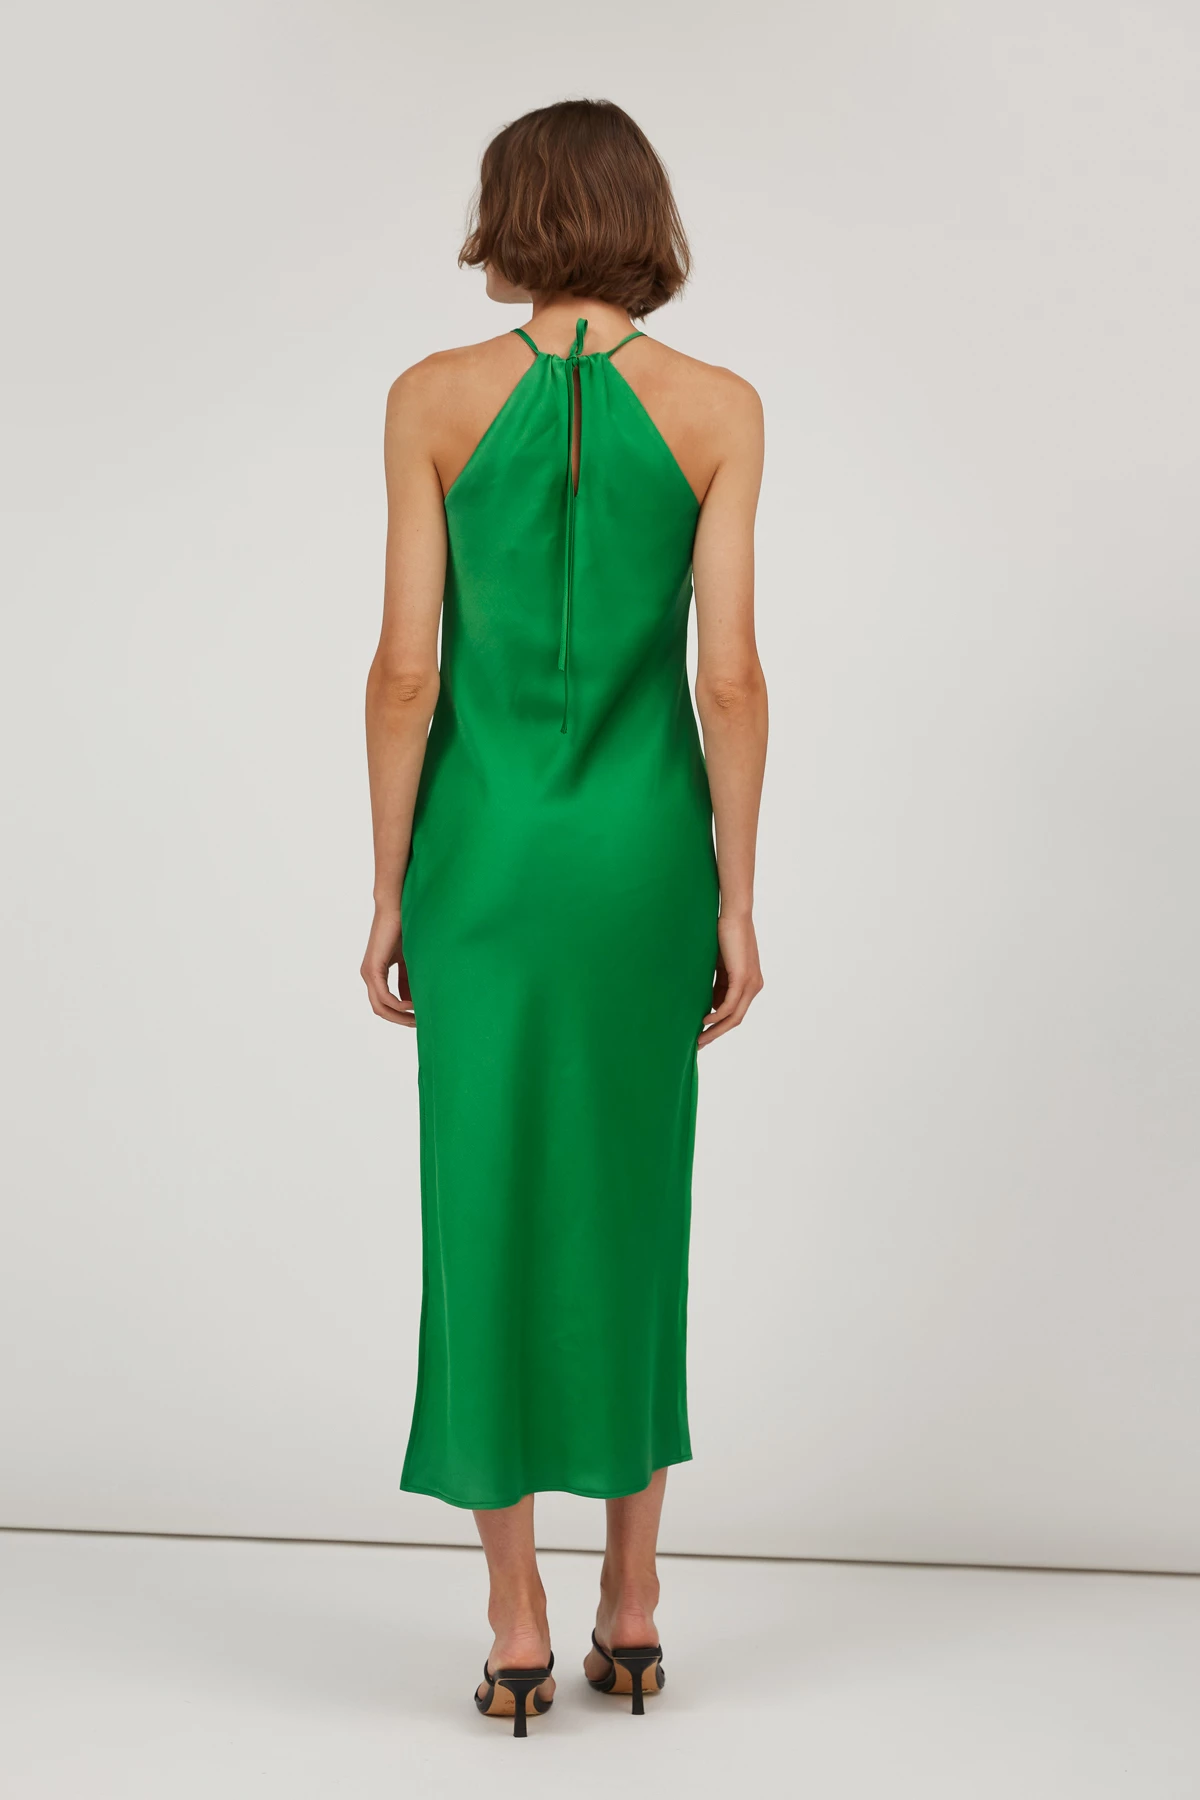 Green satin slip dress, photo 4